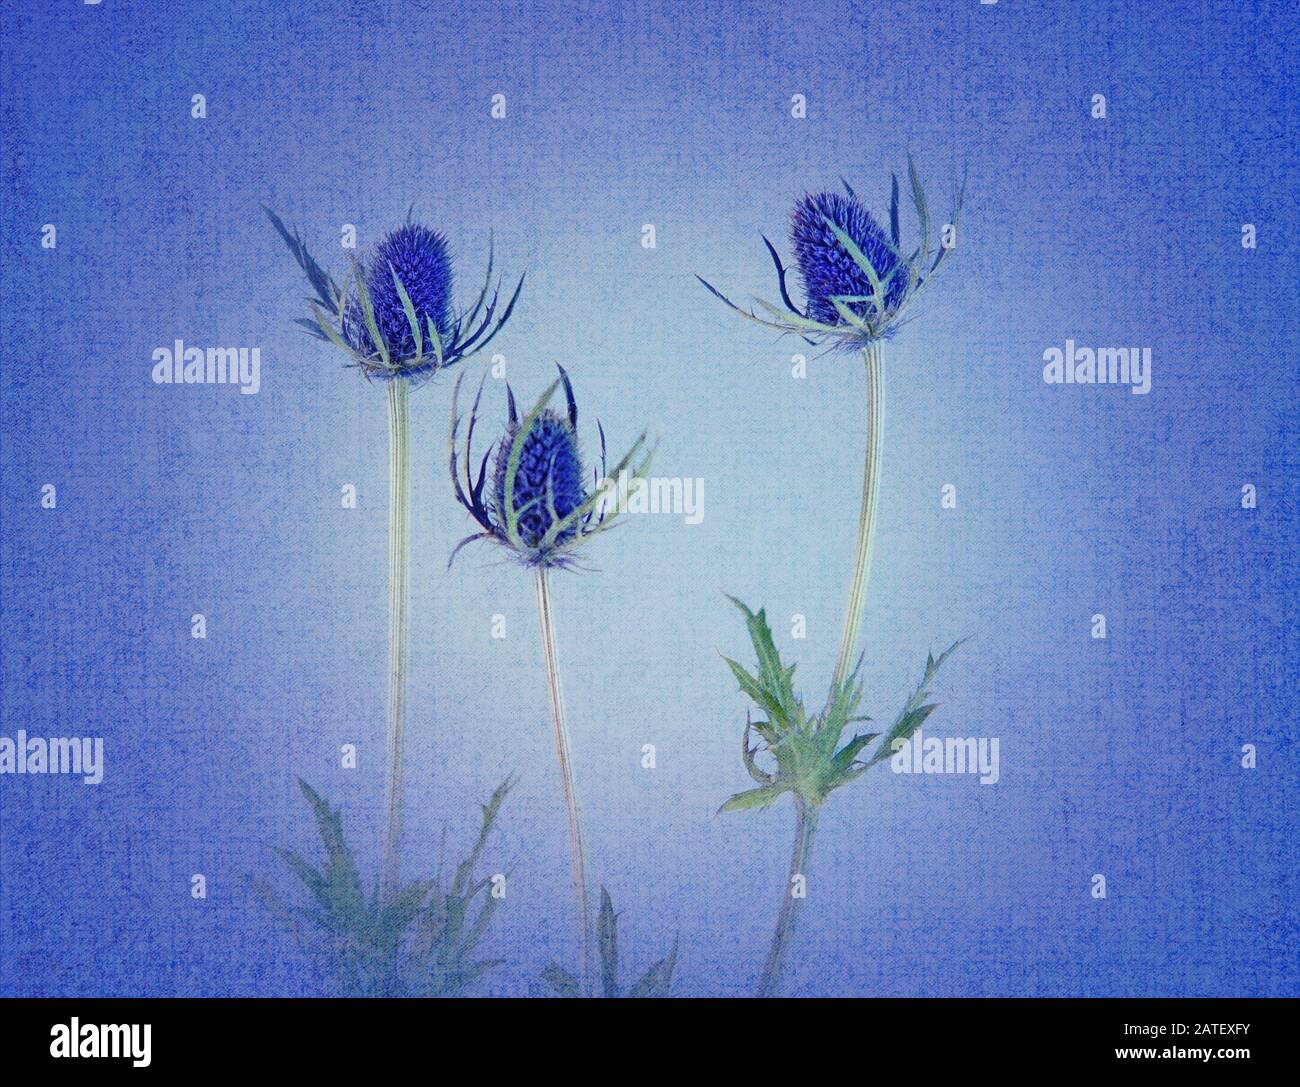 Resumen de tres flores secas de madriguera sobre un fondo azul luminoso texturizado Foto de stock